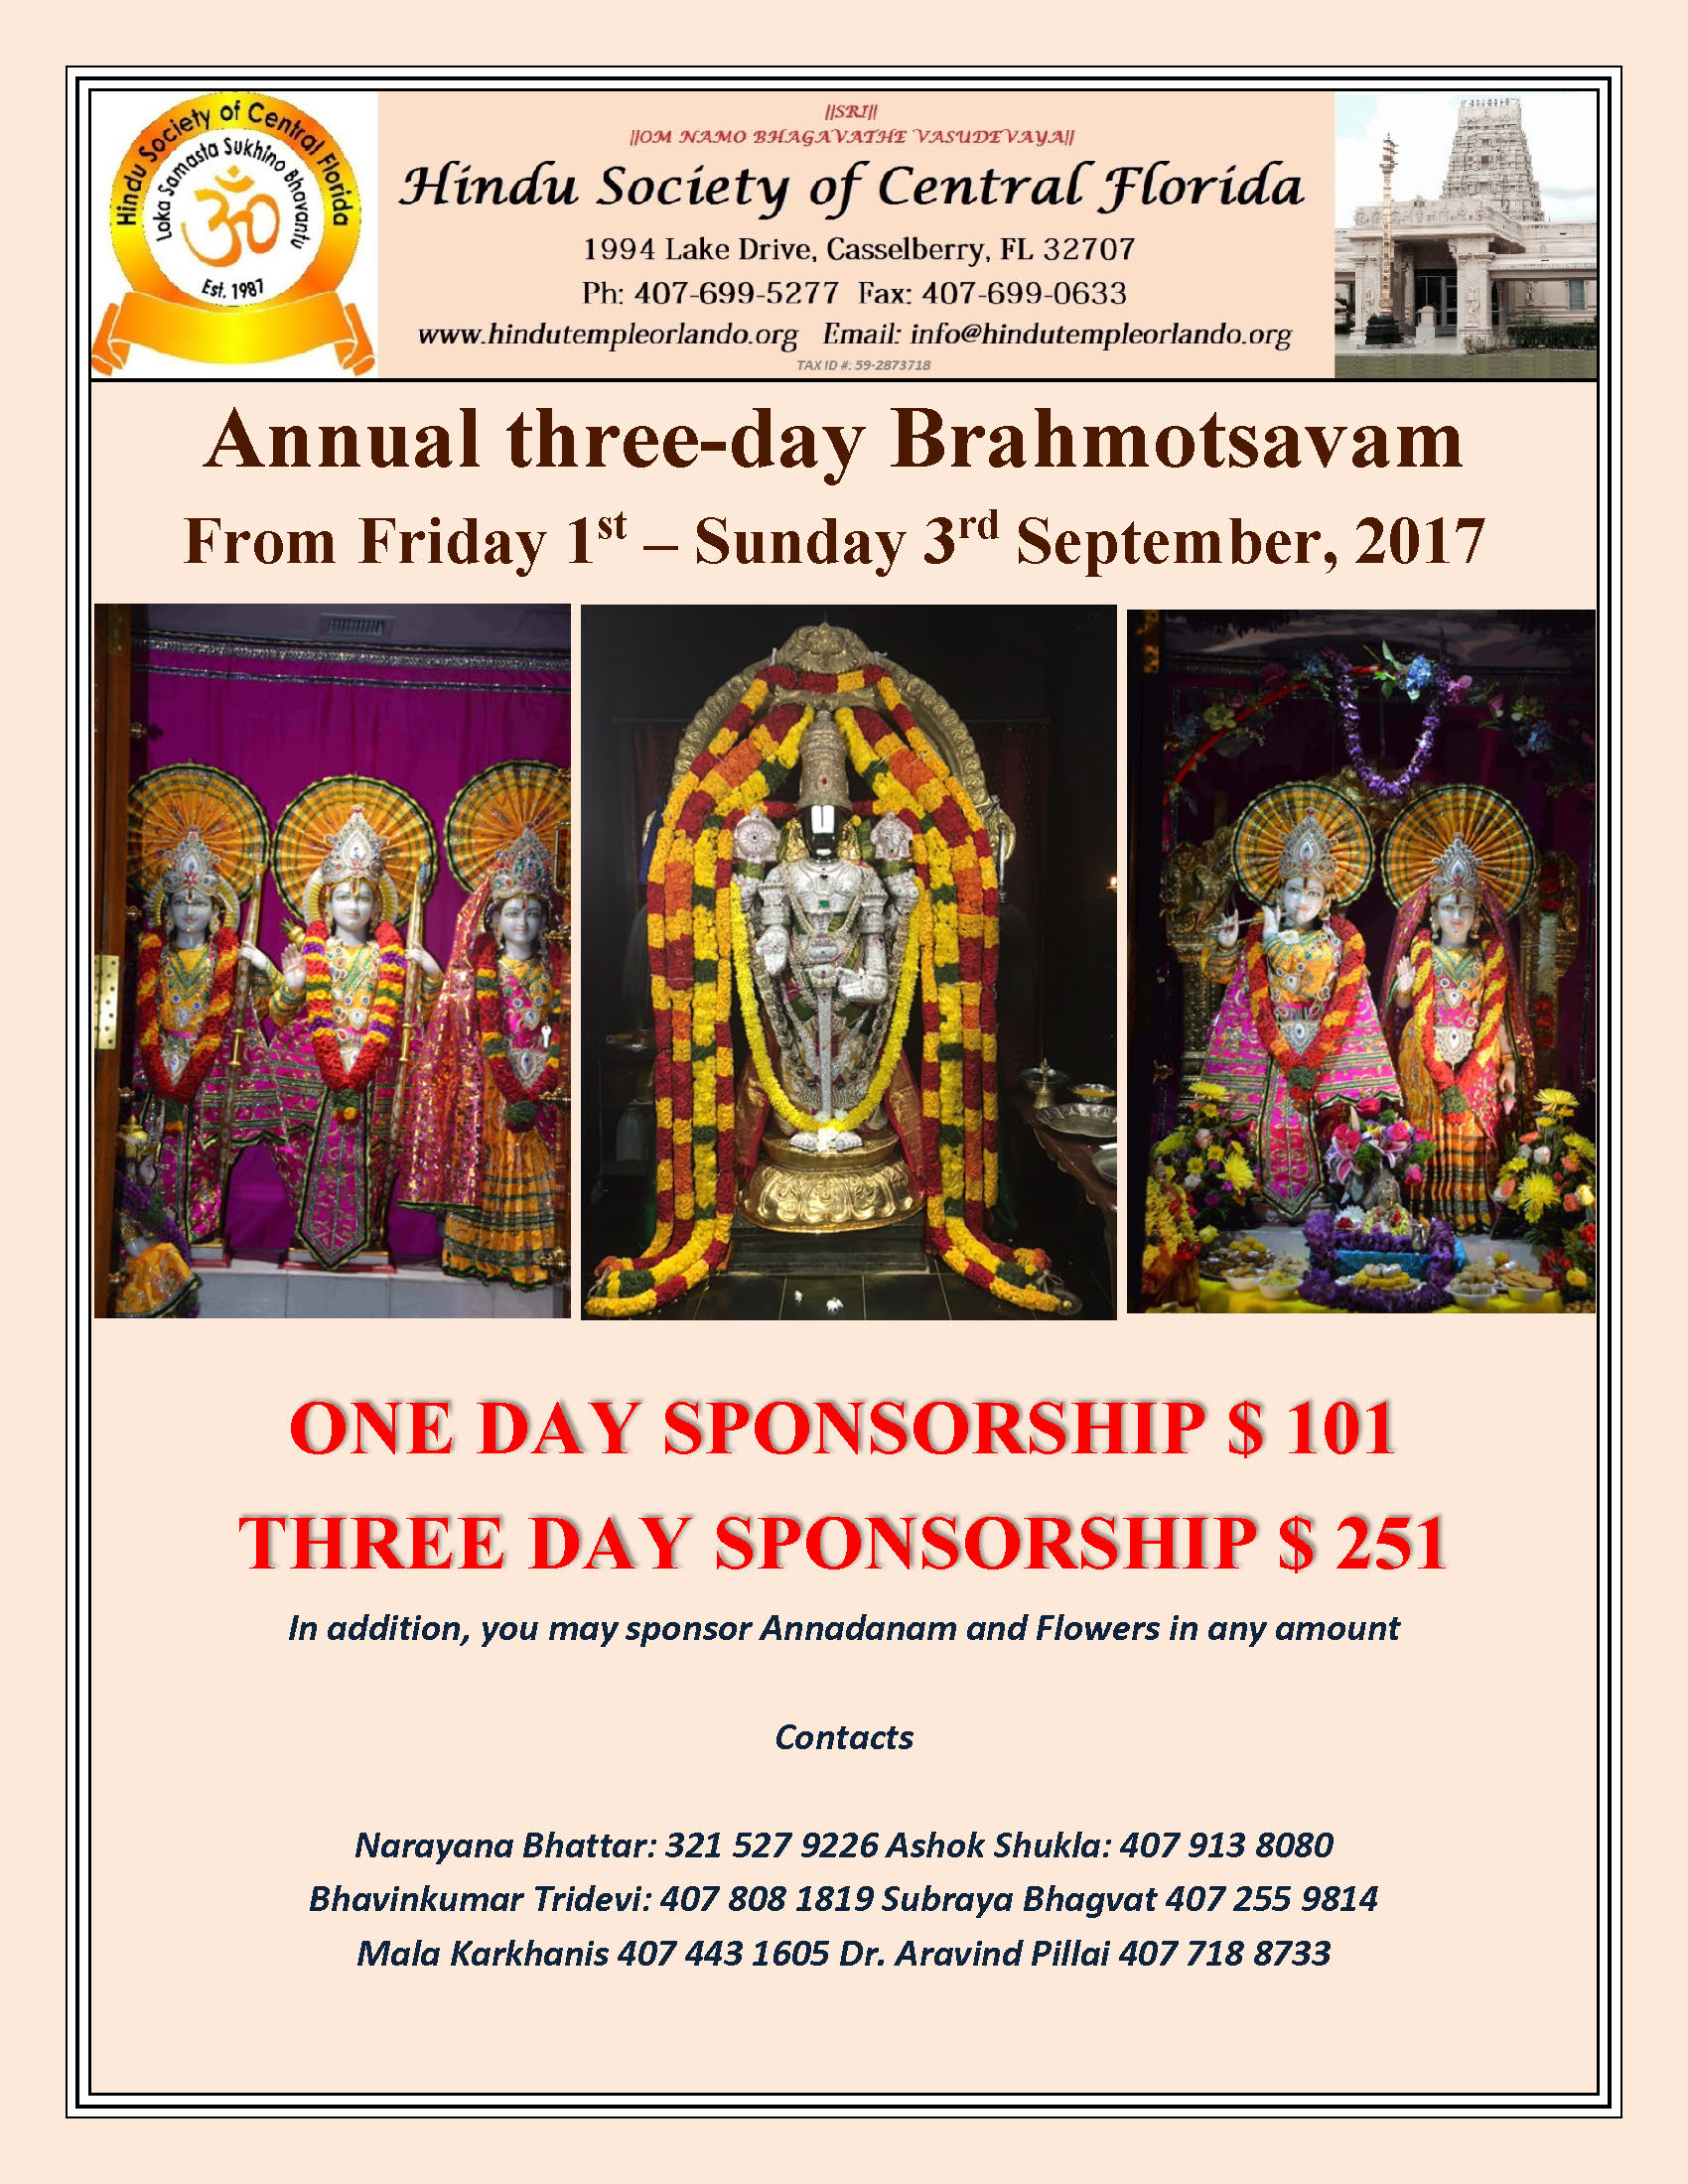 Annual Three-day Brahmotsavam